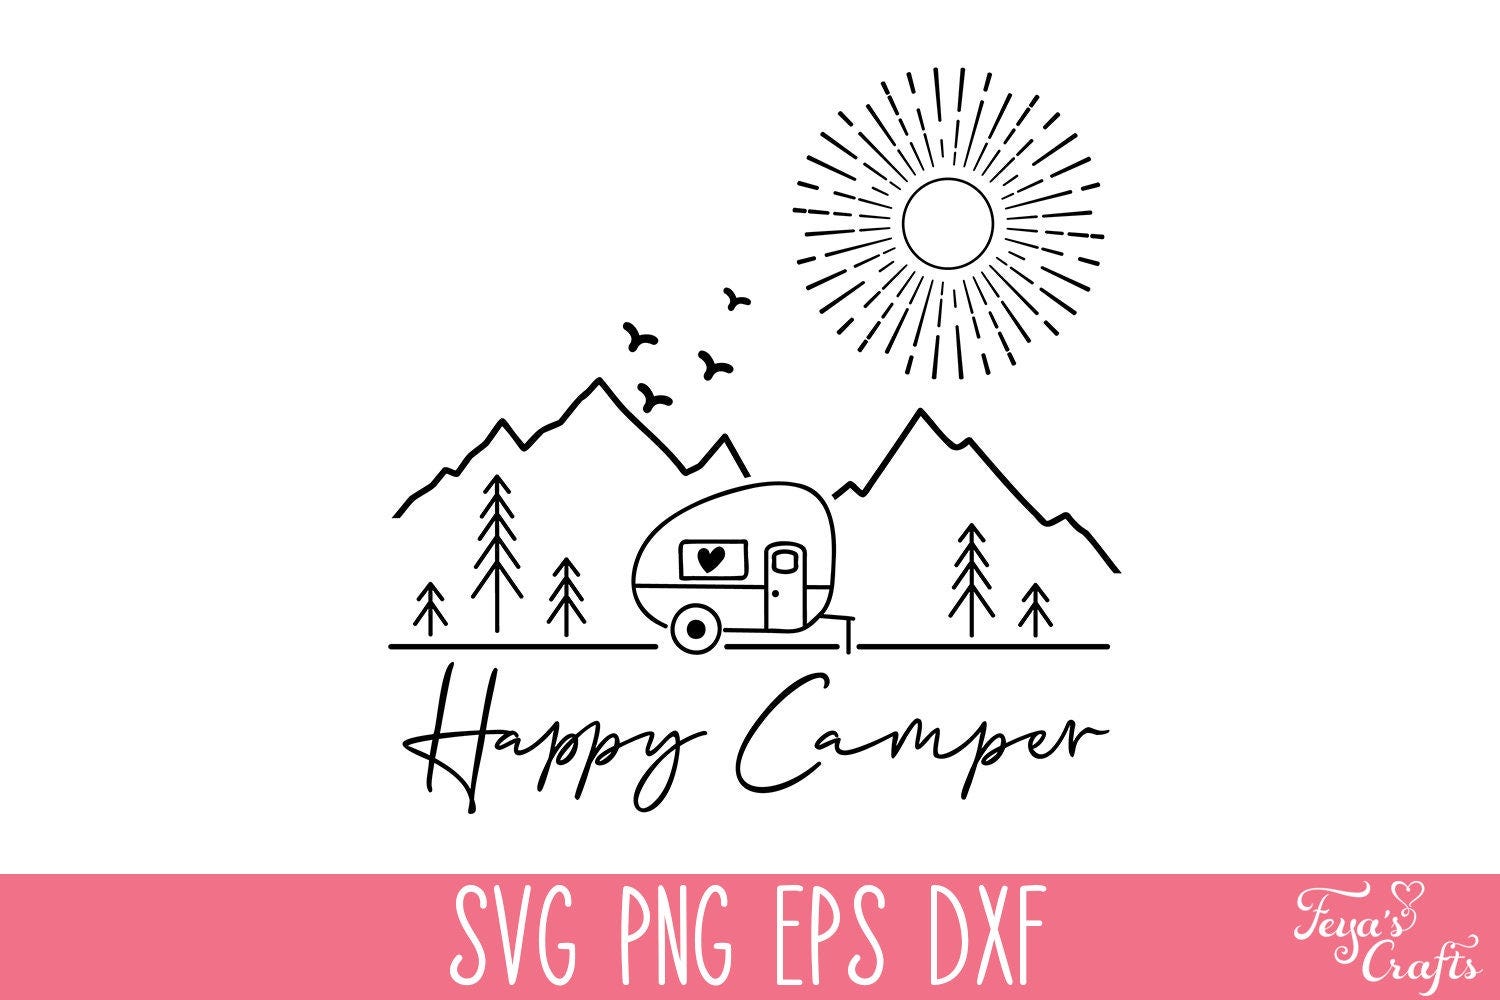 Happy Camper SVG PNG, Camping SVG Cricut, Camping Shirt Svg, Camp Life Svg, Adventure Svg, Glamping Svg, Funny Camping Svg Vector